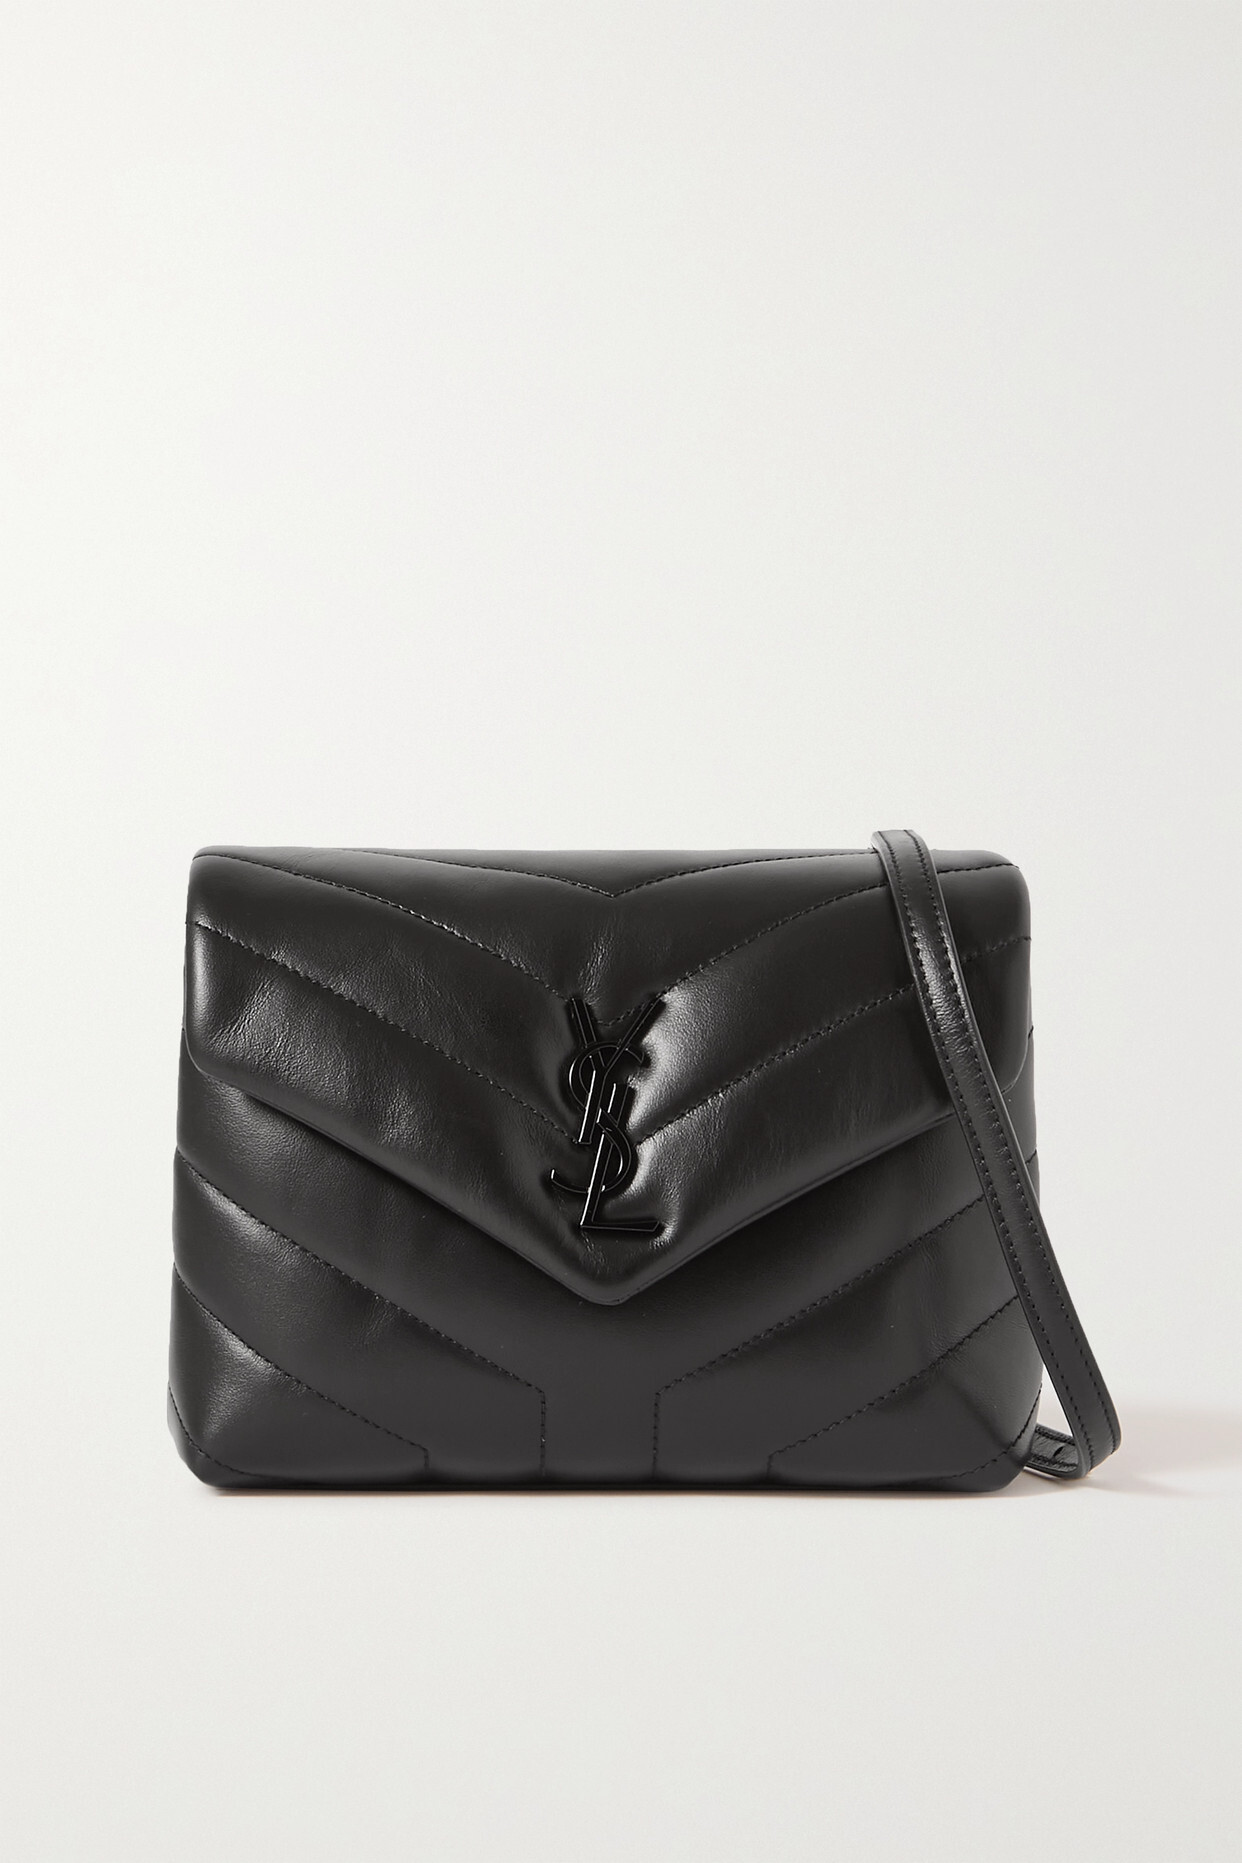 SAINT LAURENT - Loulou Toy Quilted Leather Shoulder Bag - Black